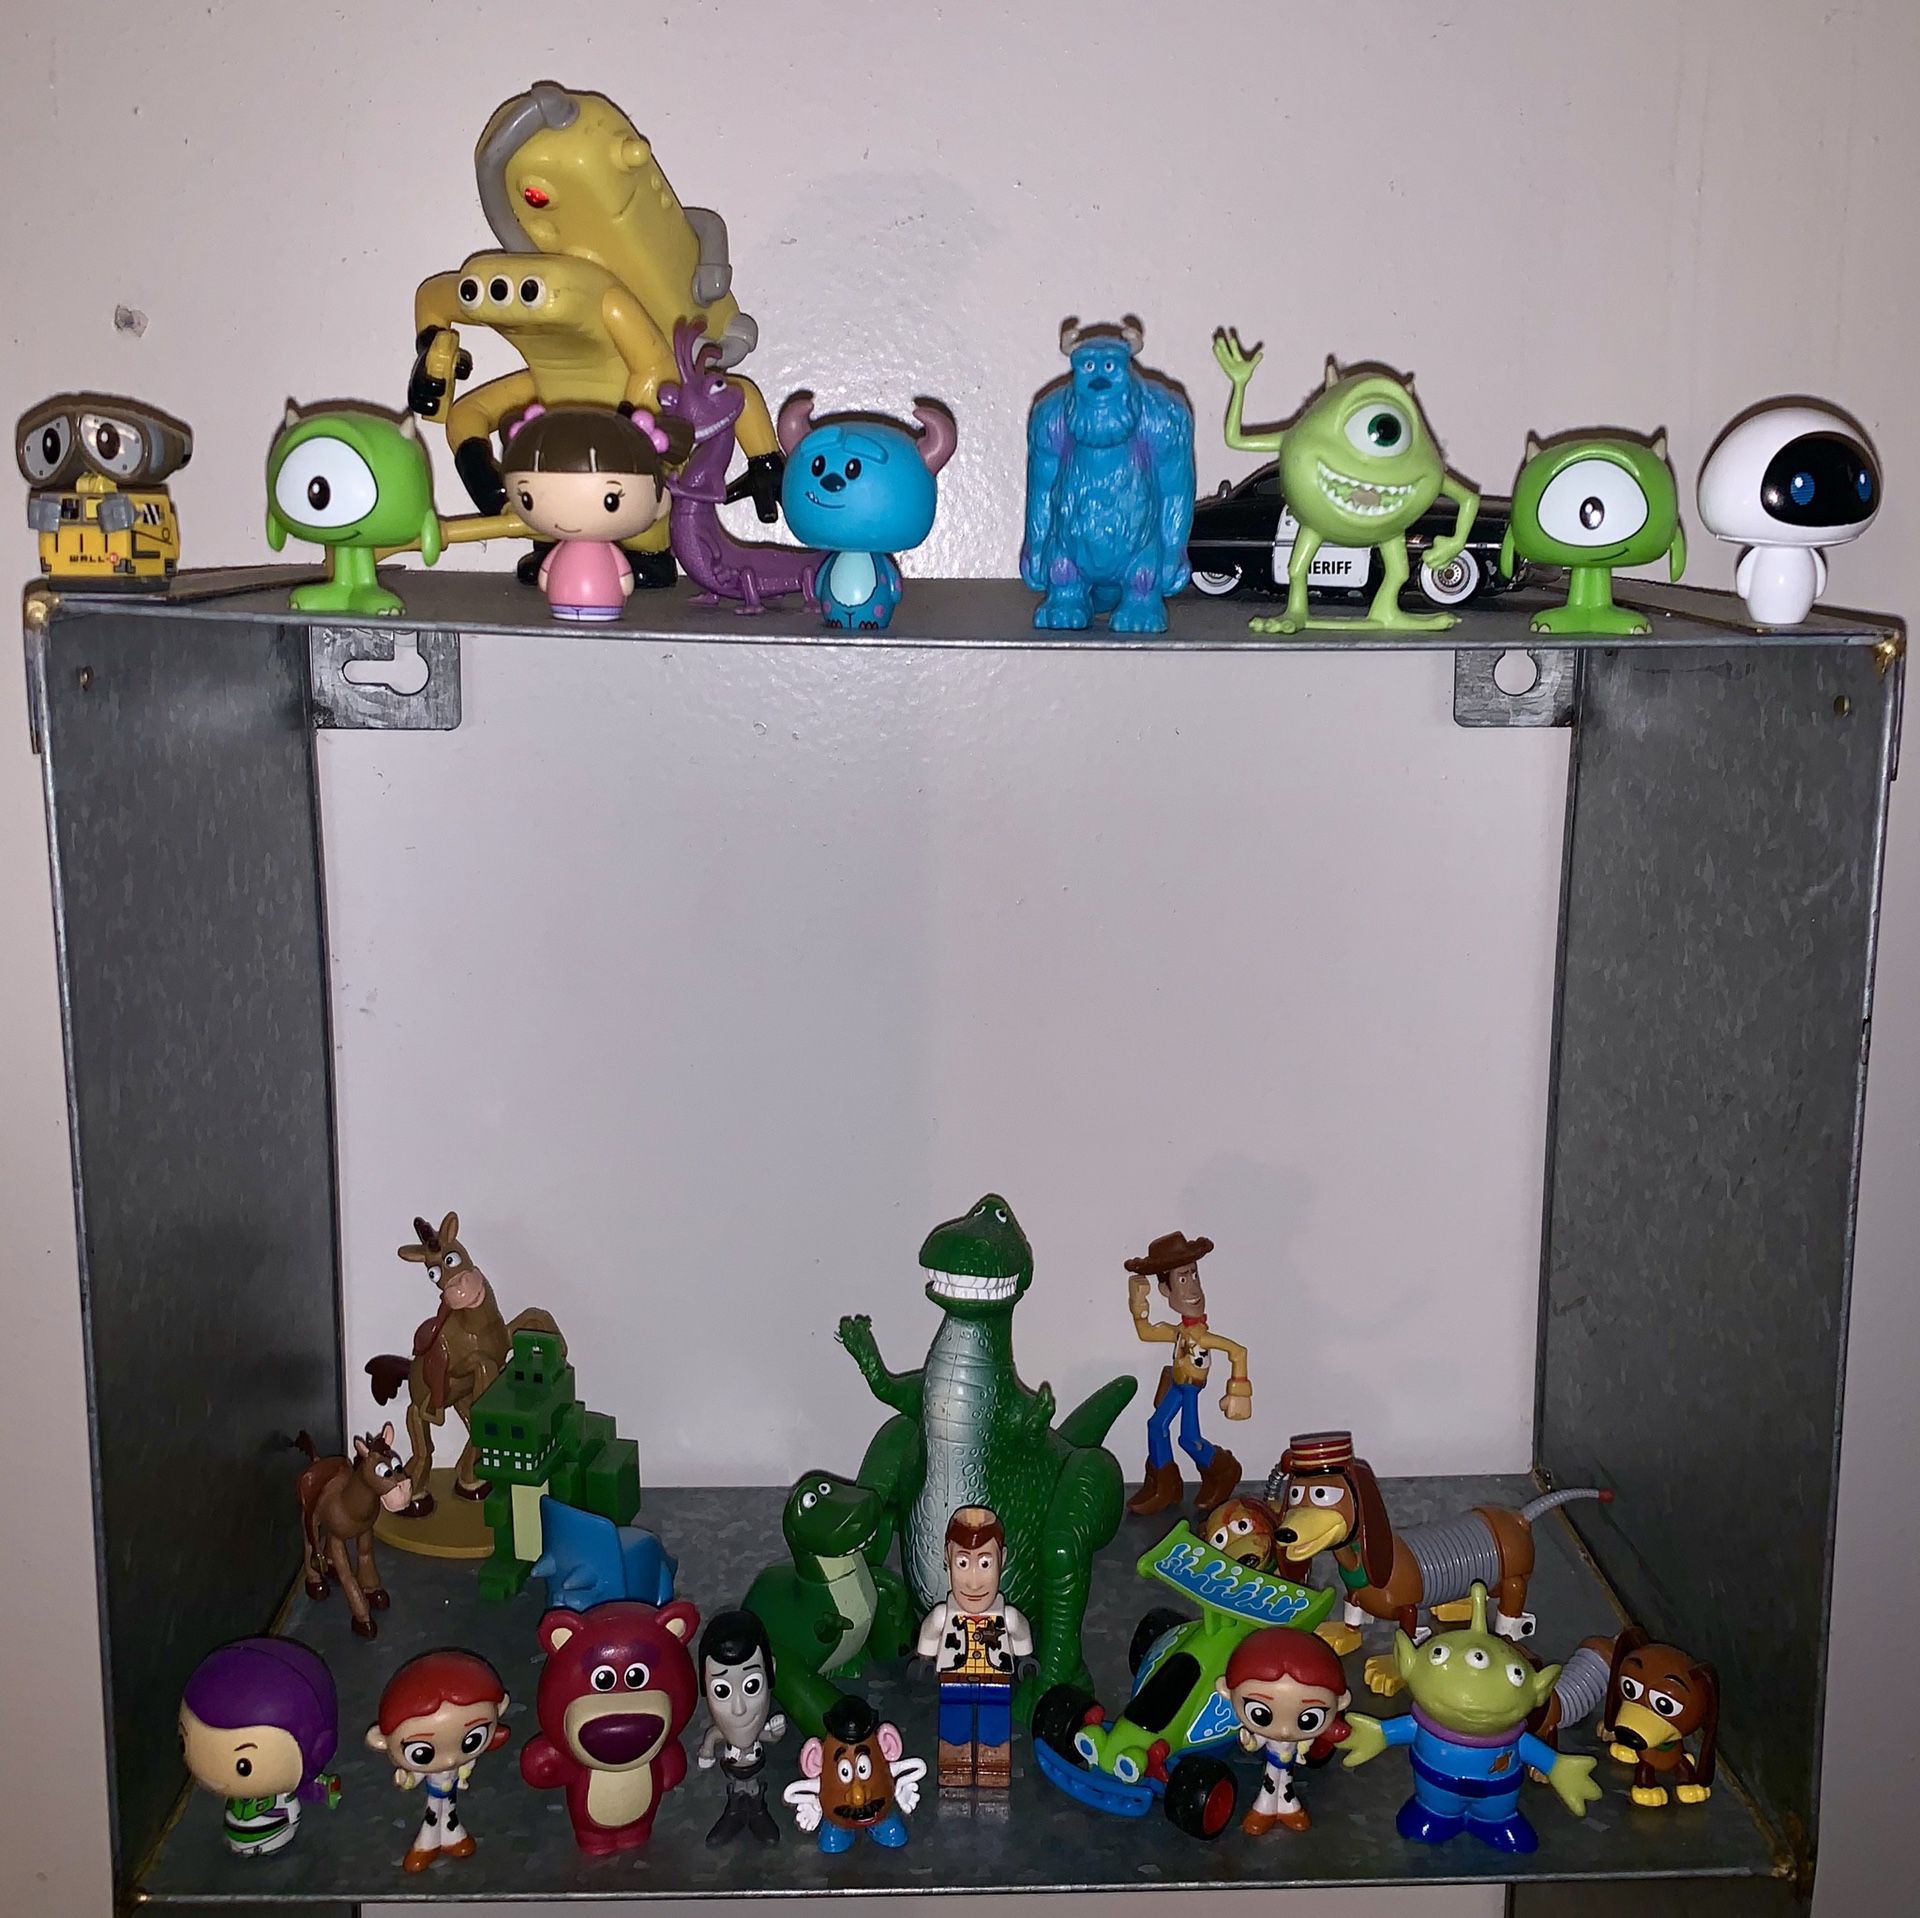 Disney X Pixar toys & collectibles